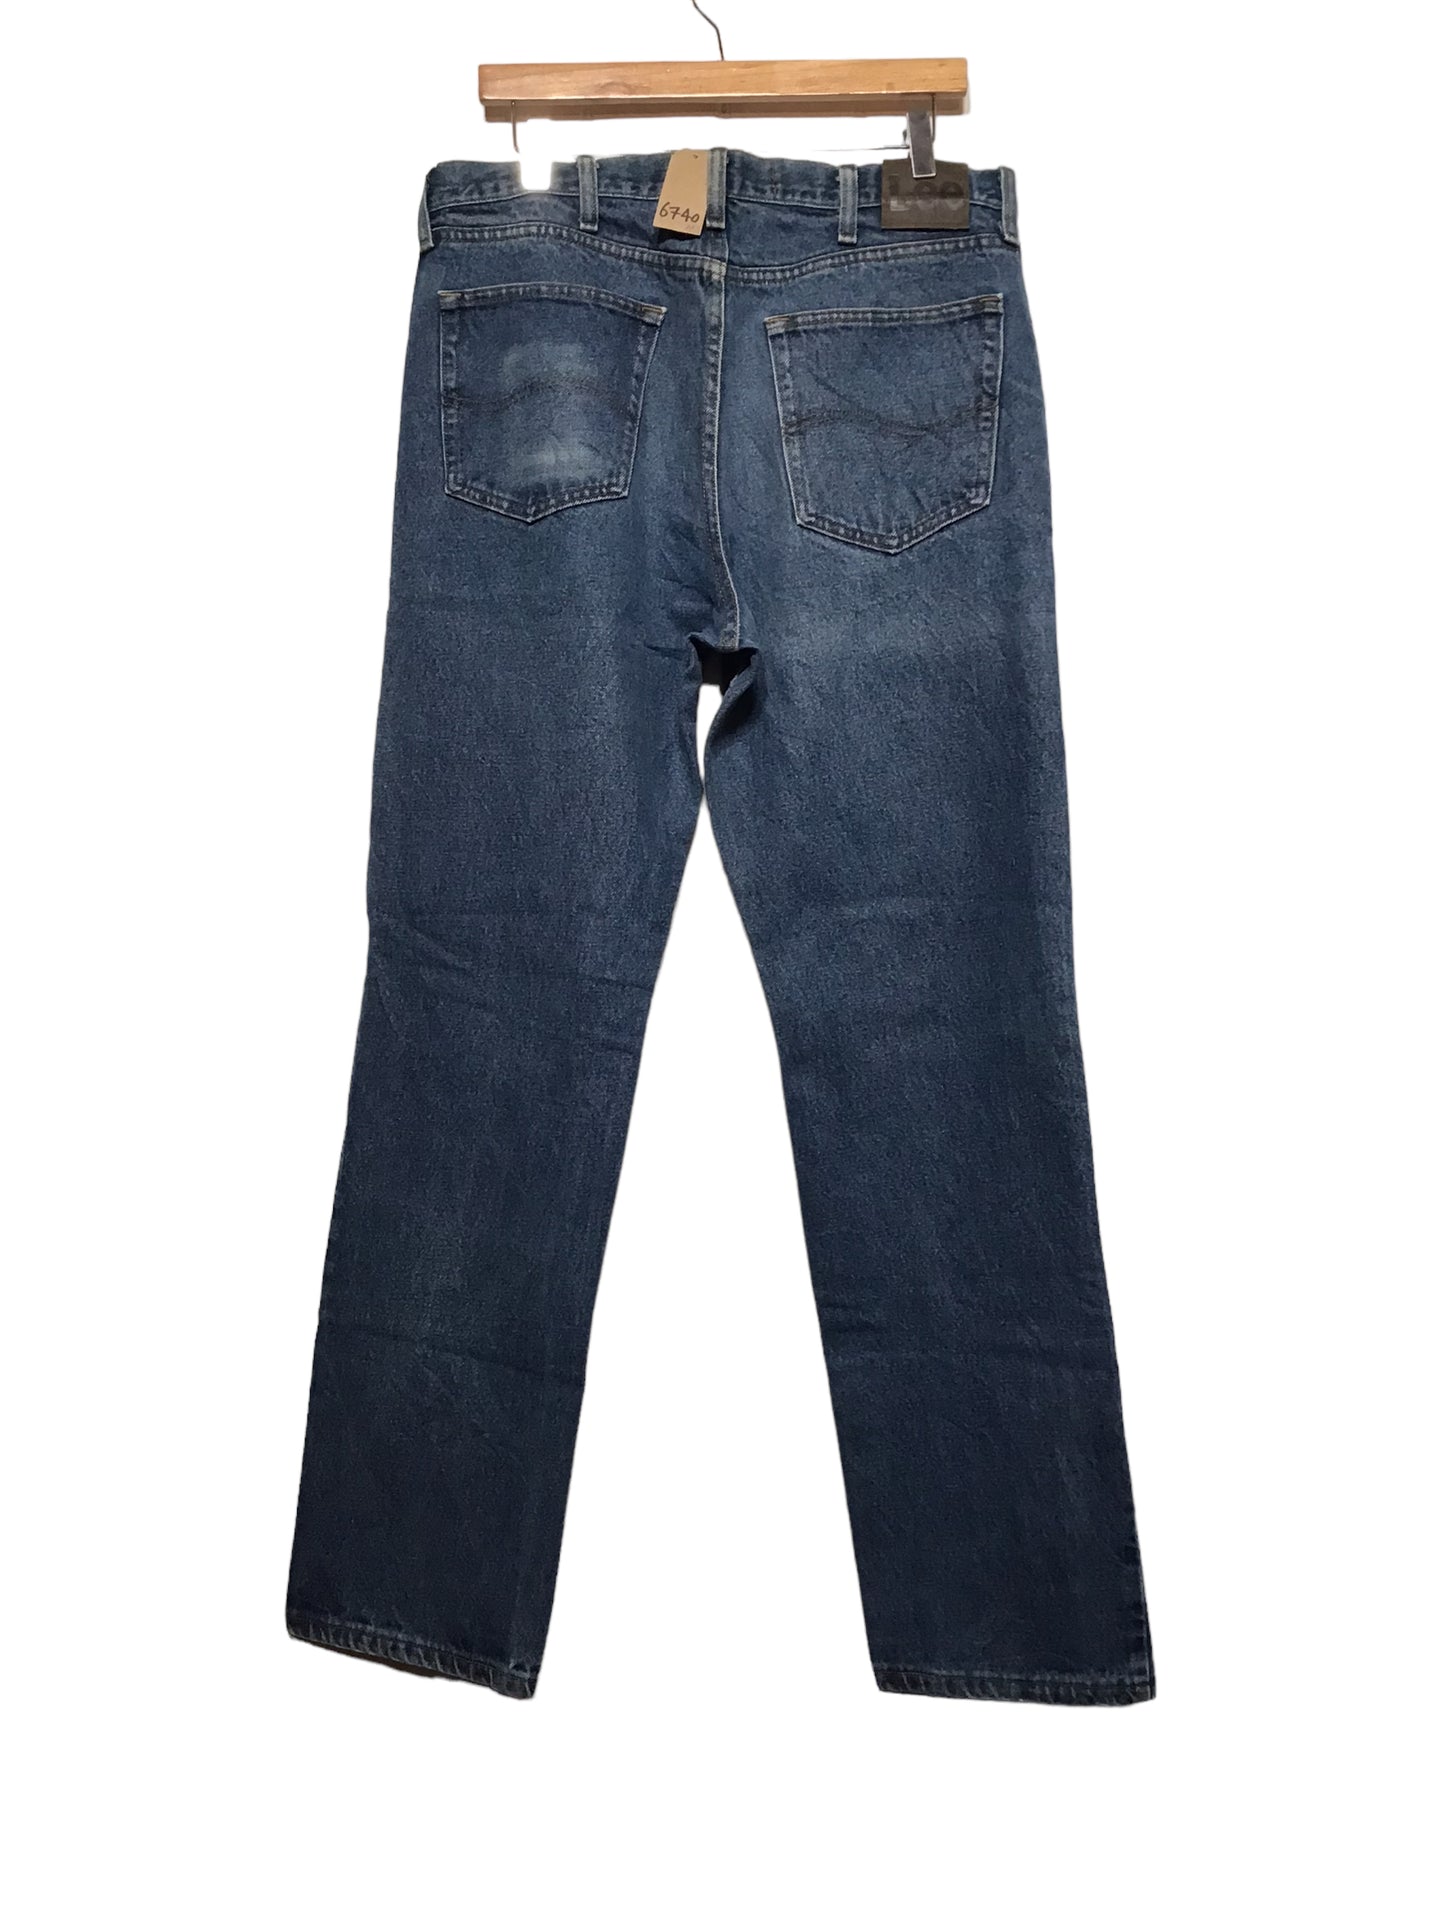 Lee Jeans Regular Fit Jeans (36x34)